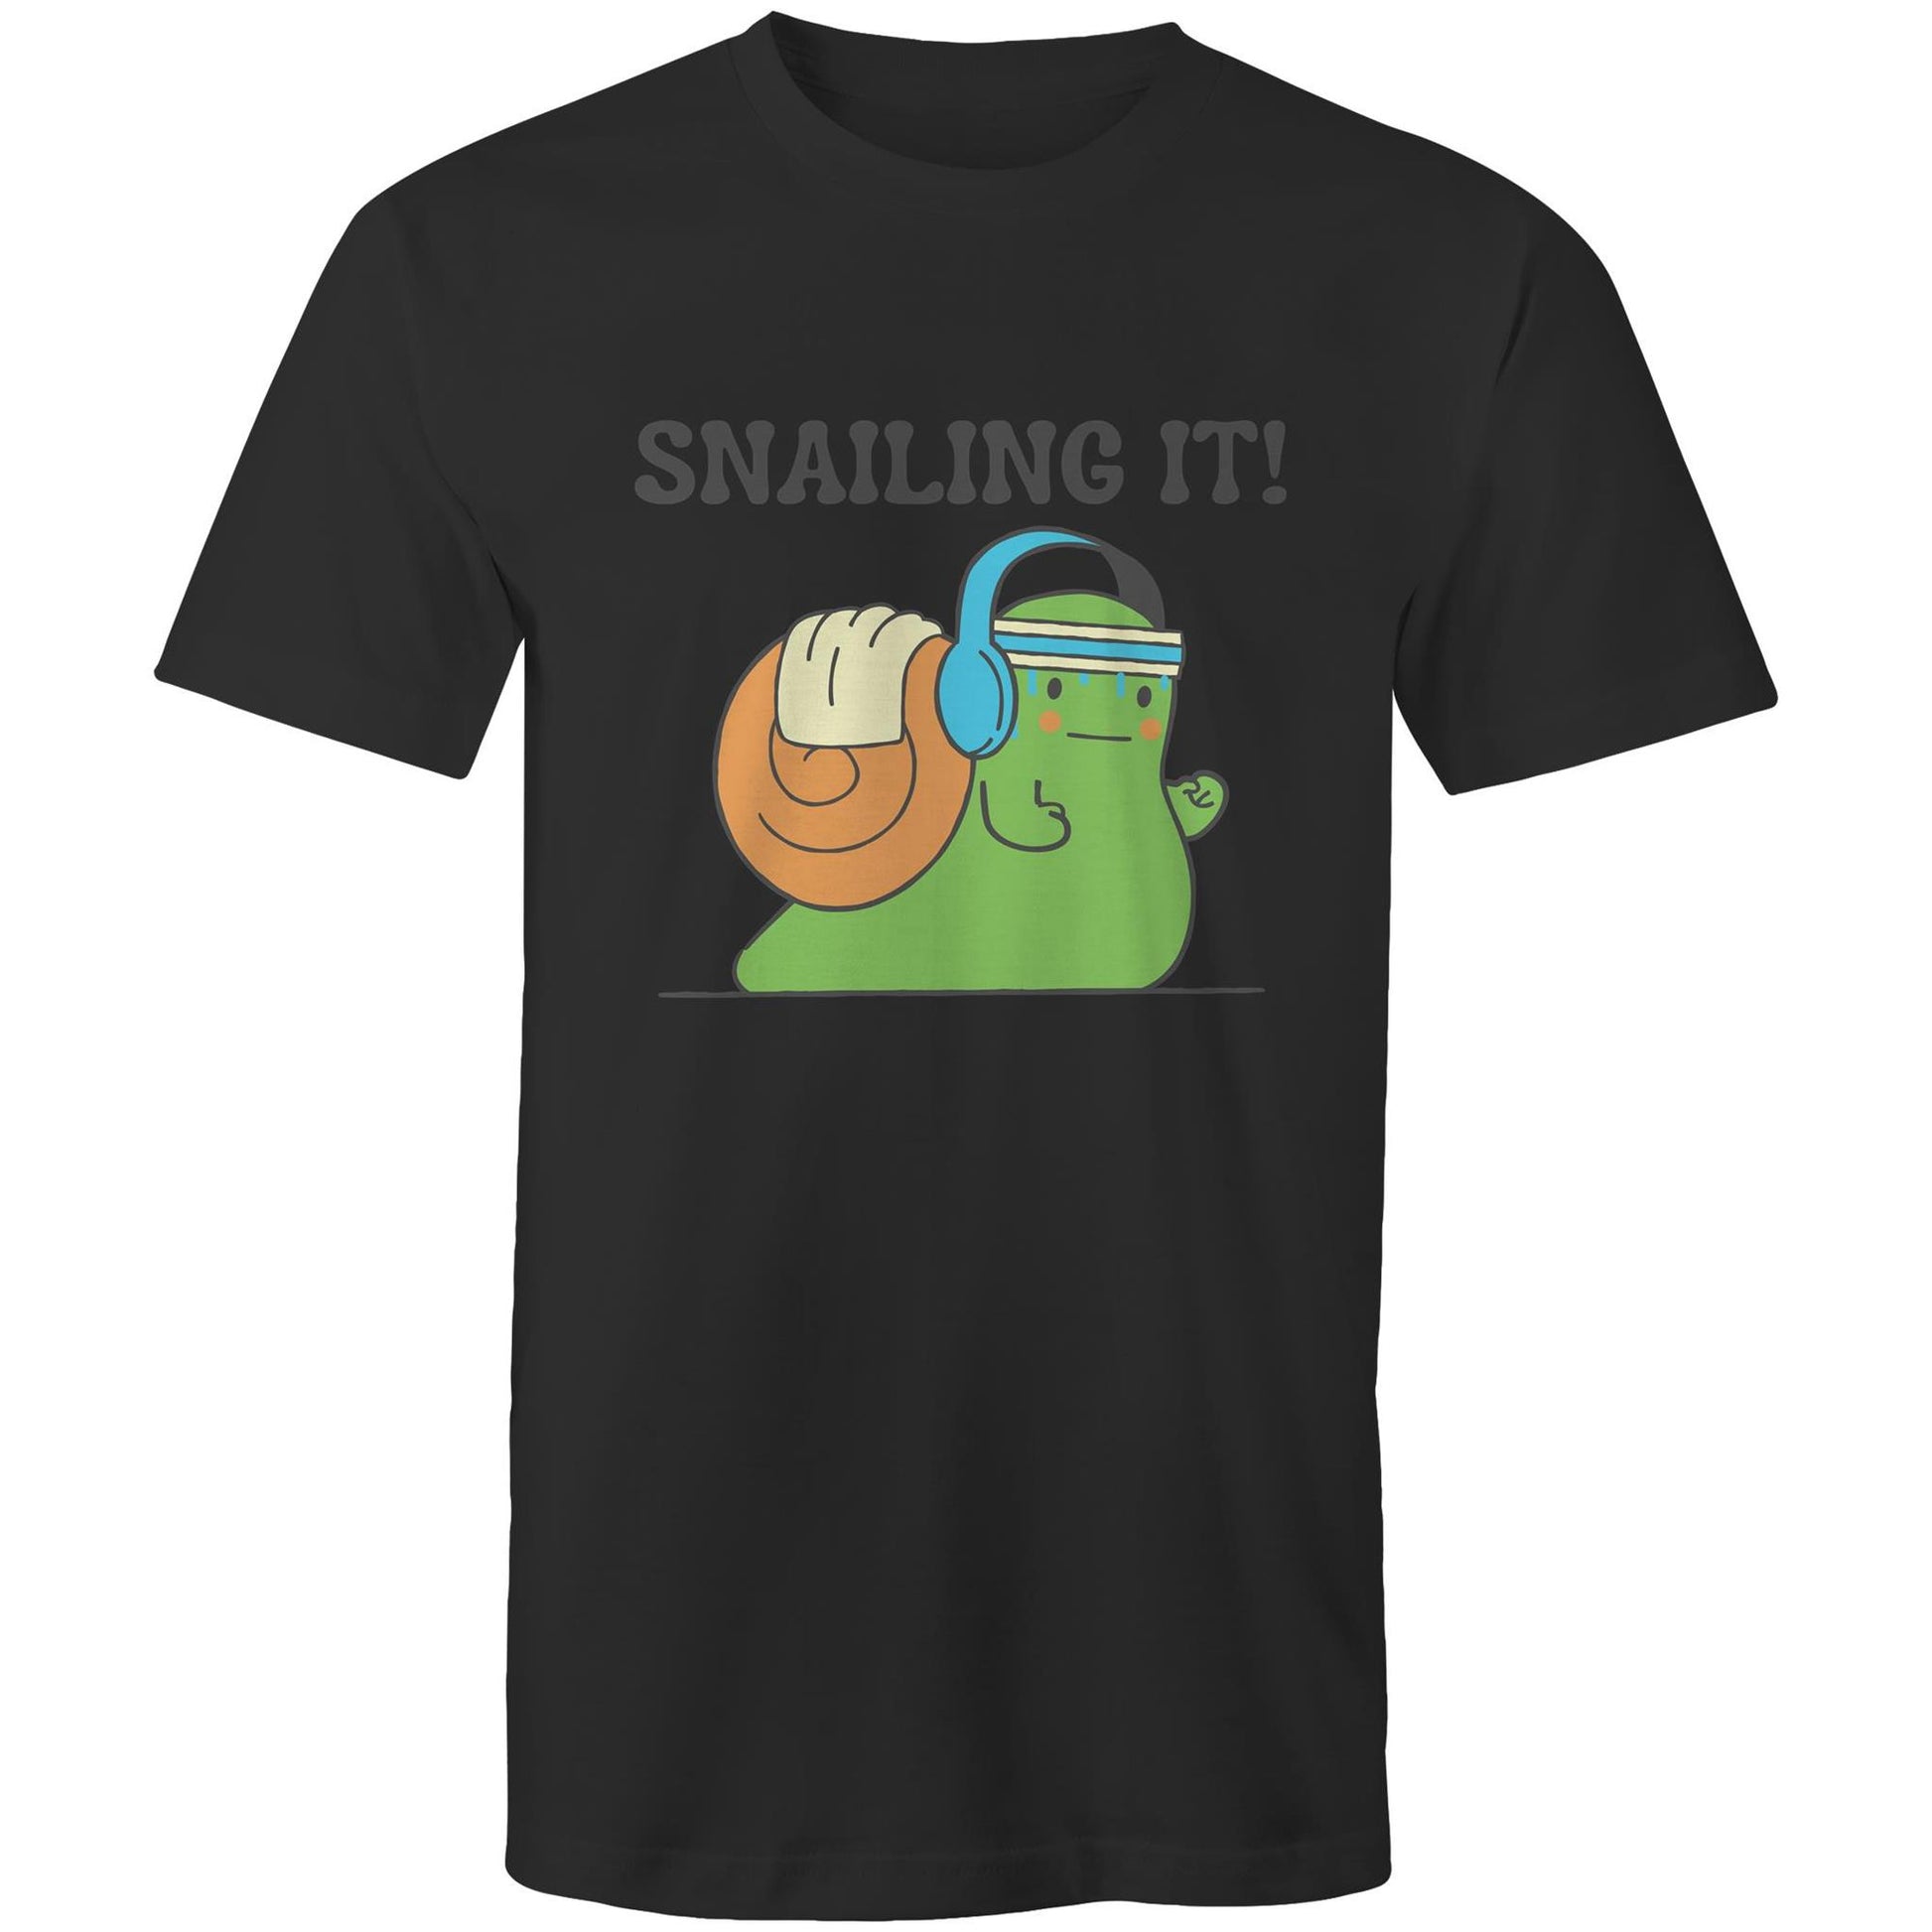 Snailing It - Short Sleeve T-shirt Black Fitness T-shirt